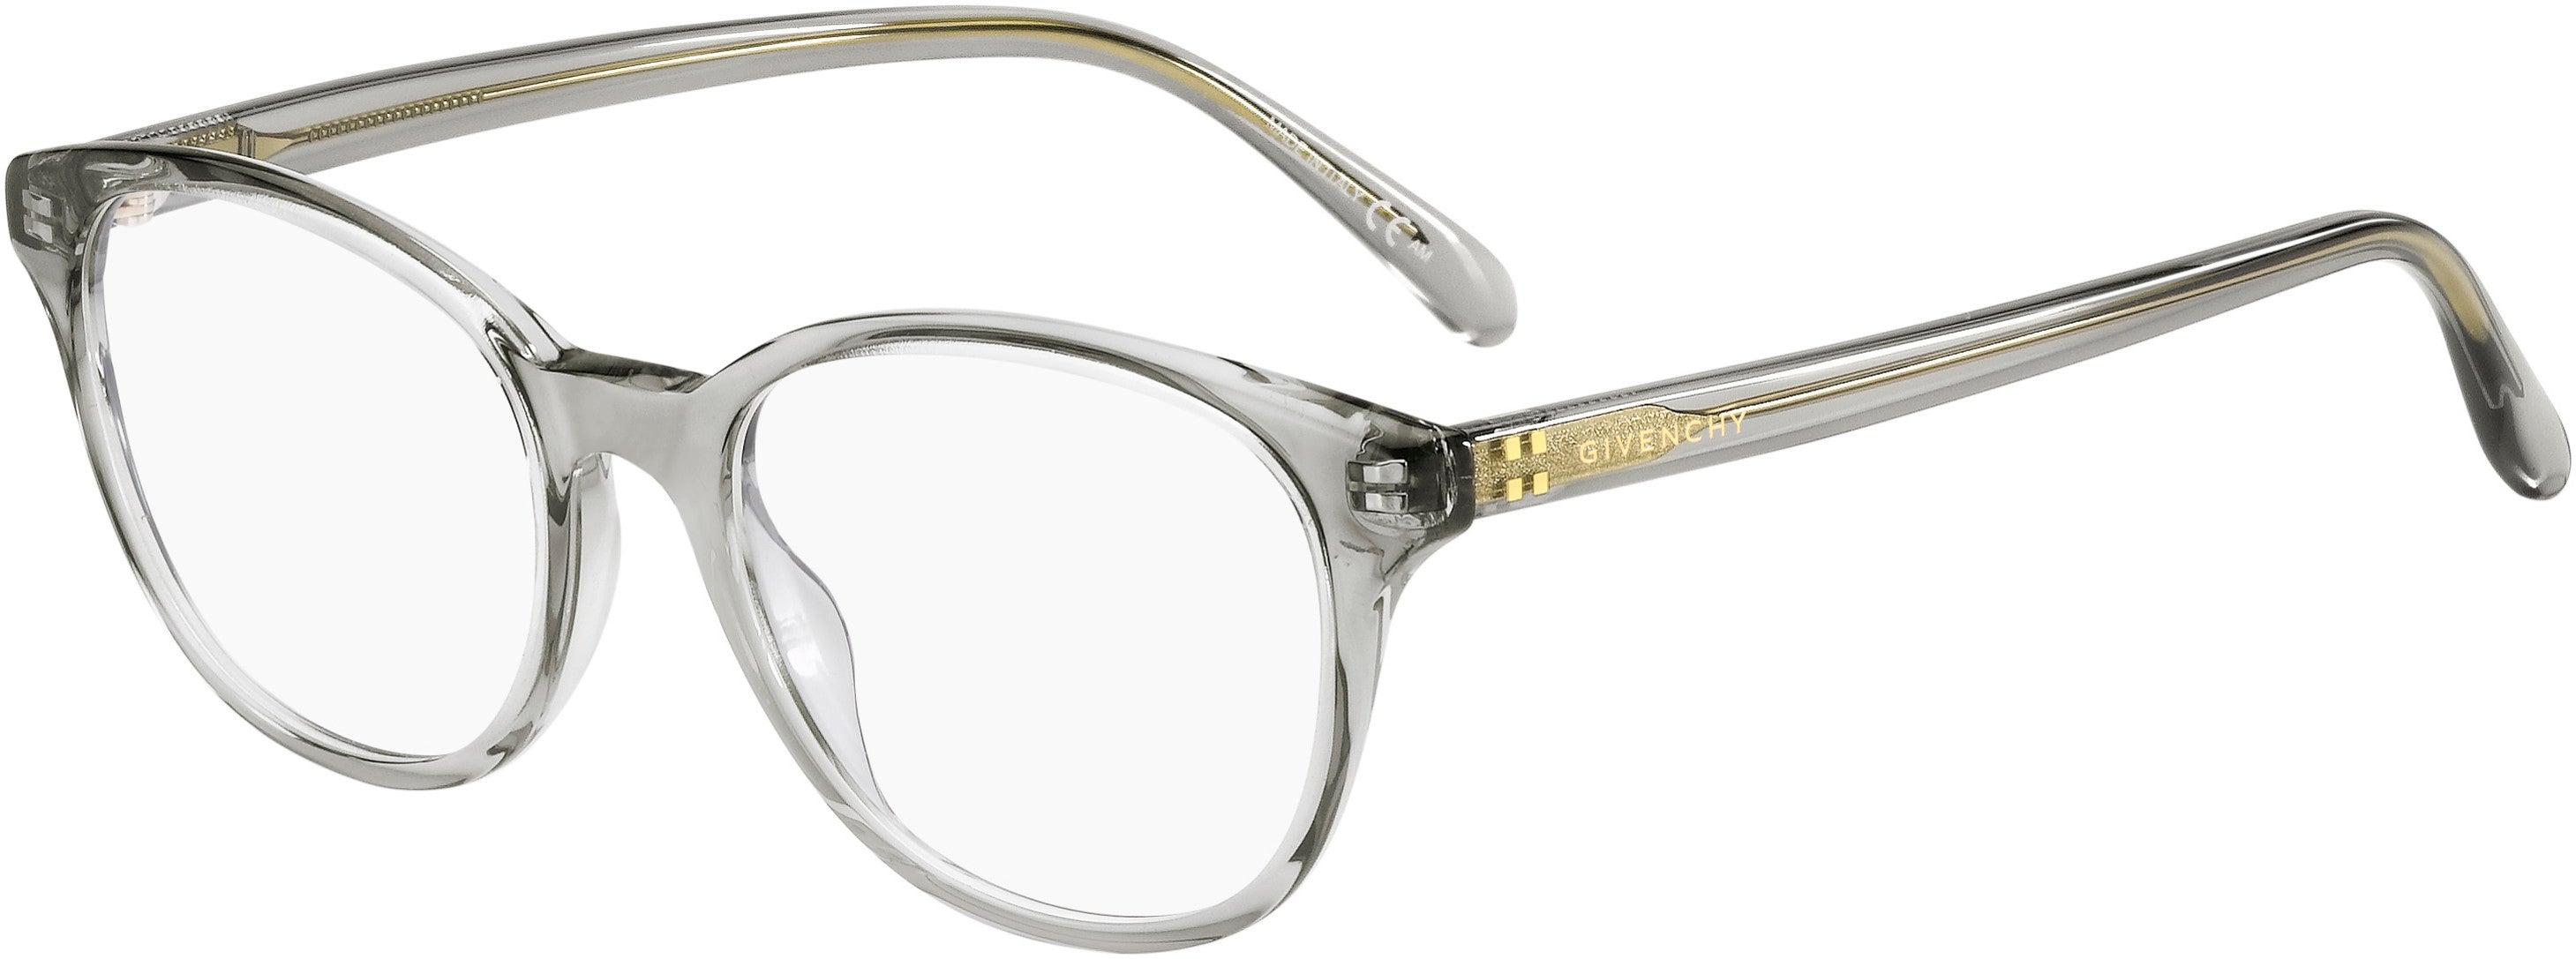  Givenchy 0106 Rectangular Eyeglasses 0KB7-0KB7  Gray (00 Demo Lens)